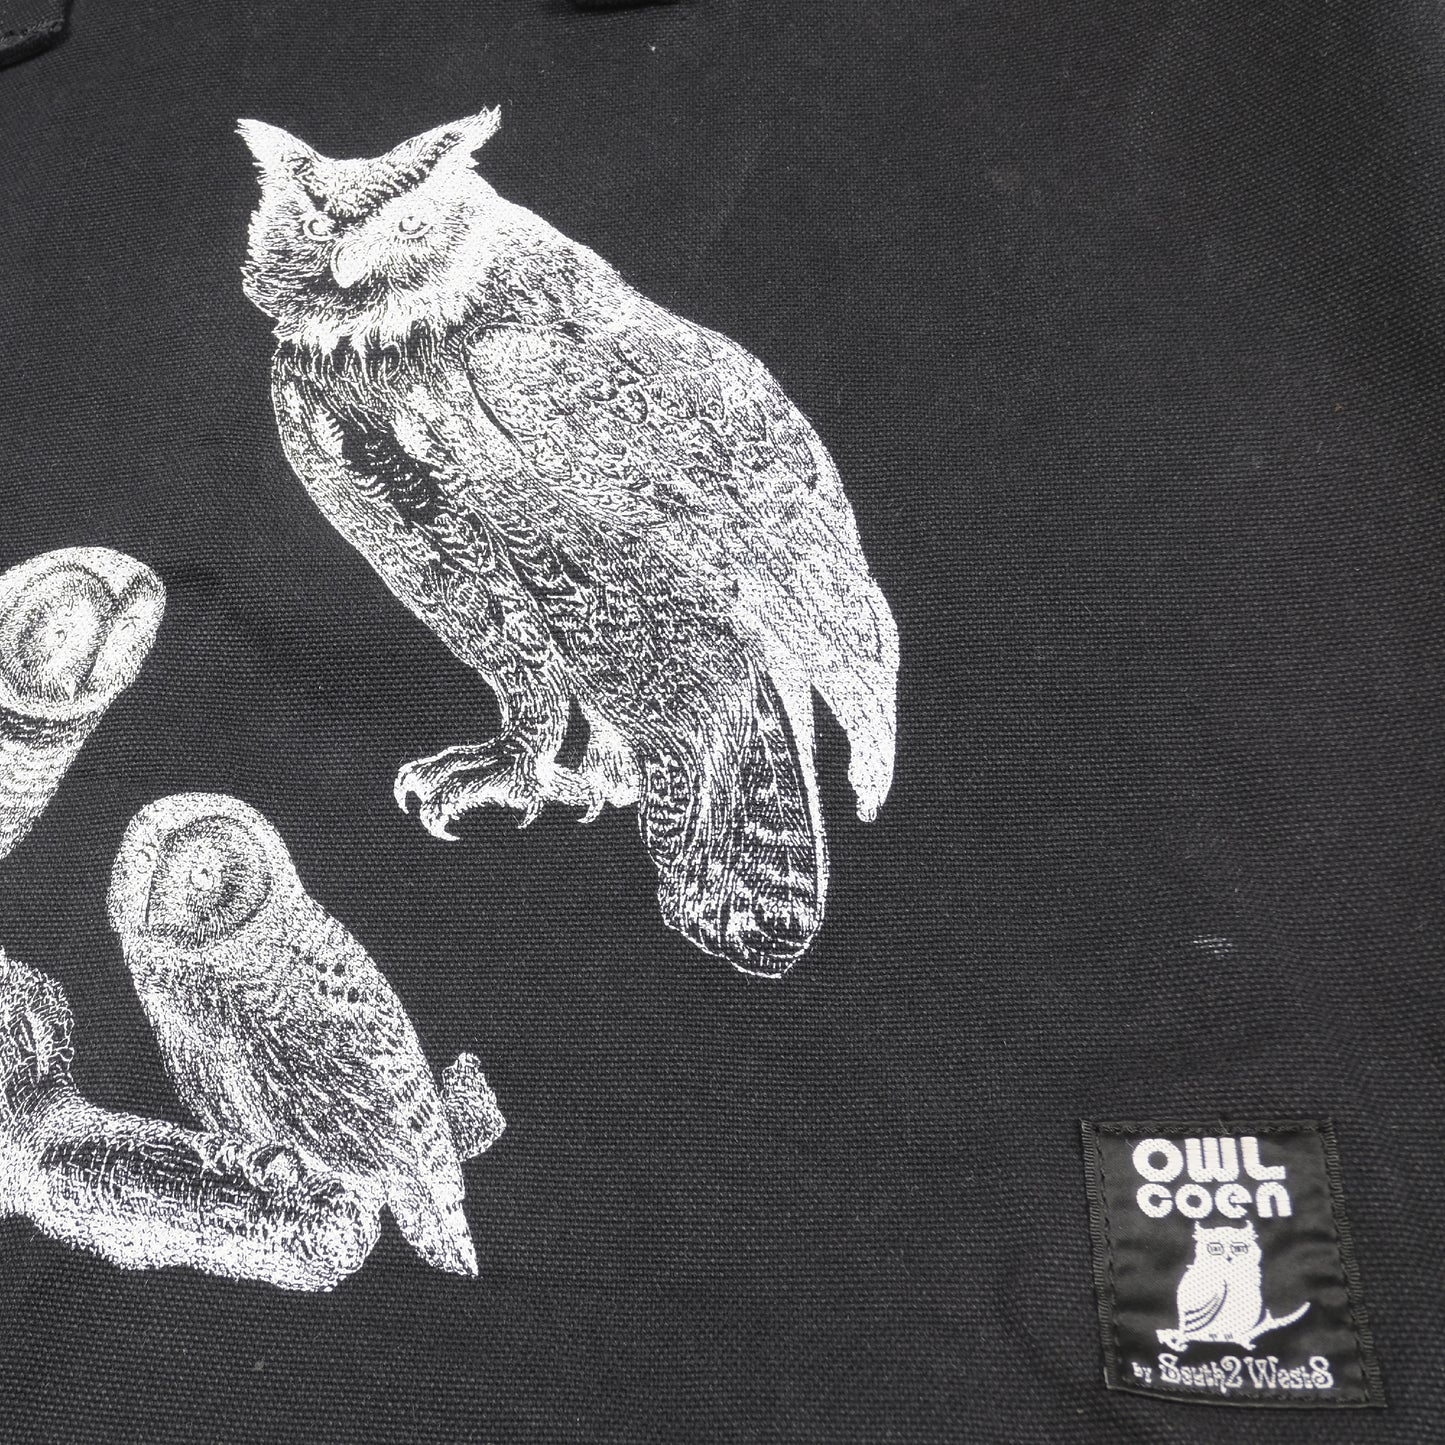 South2 West8 Owl Coen Tote/Messenger Bag